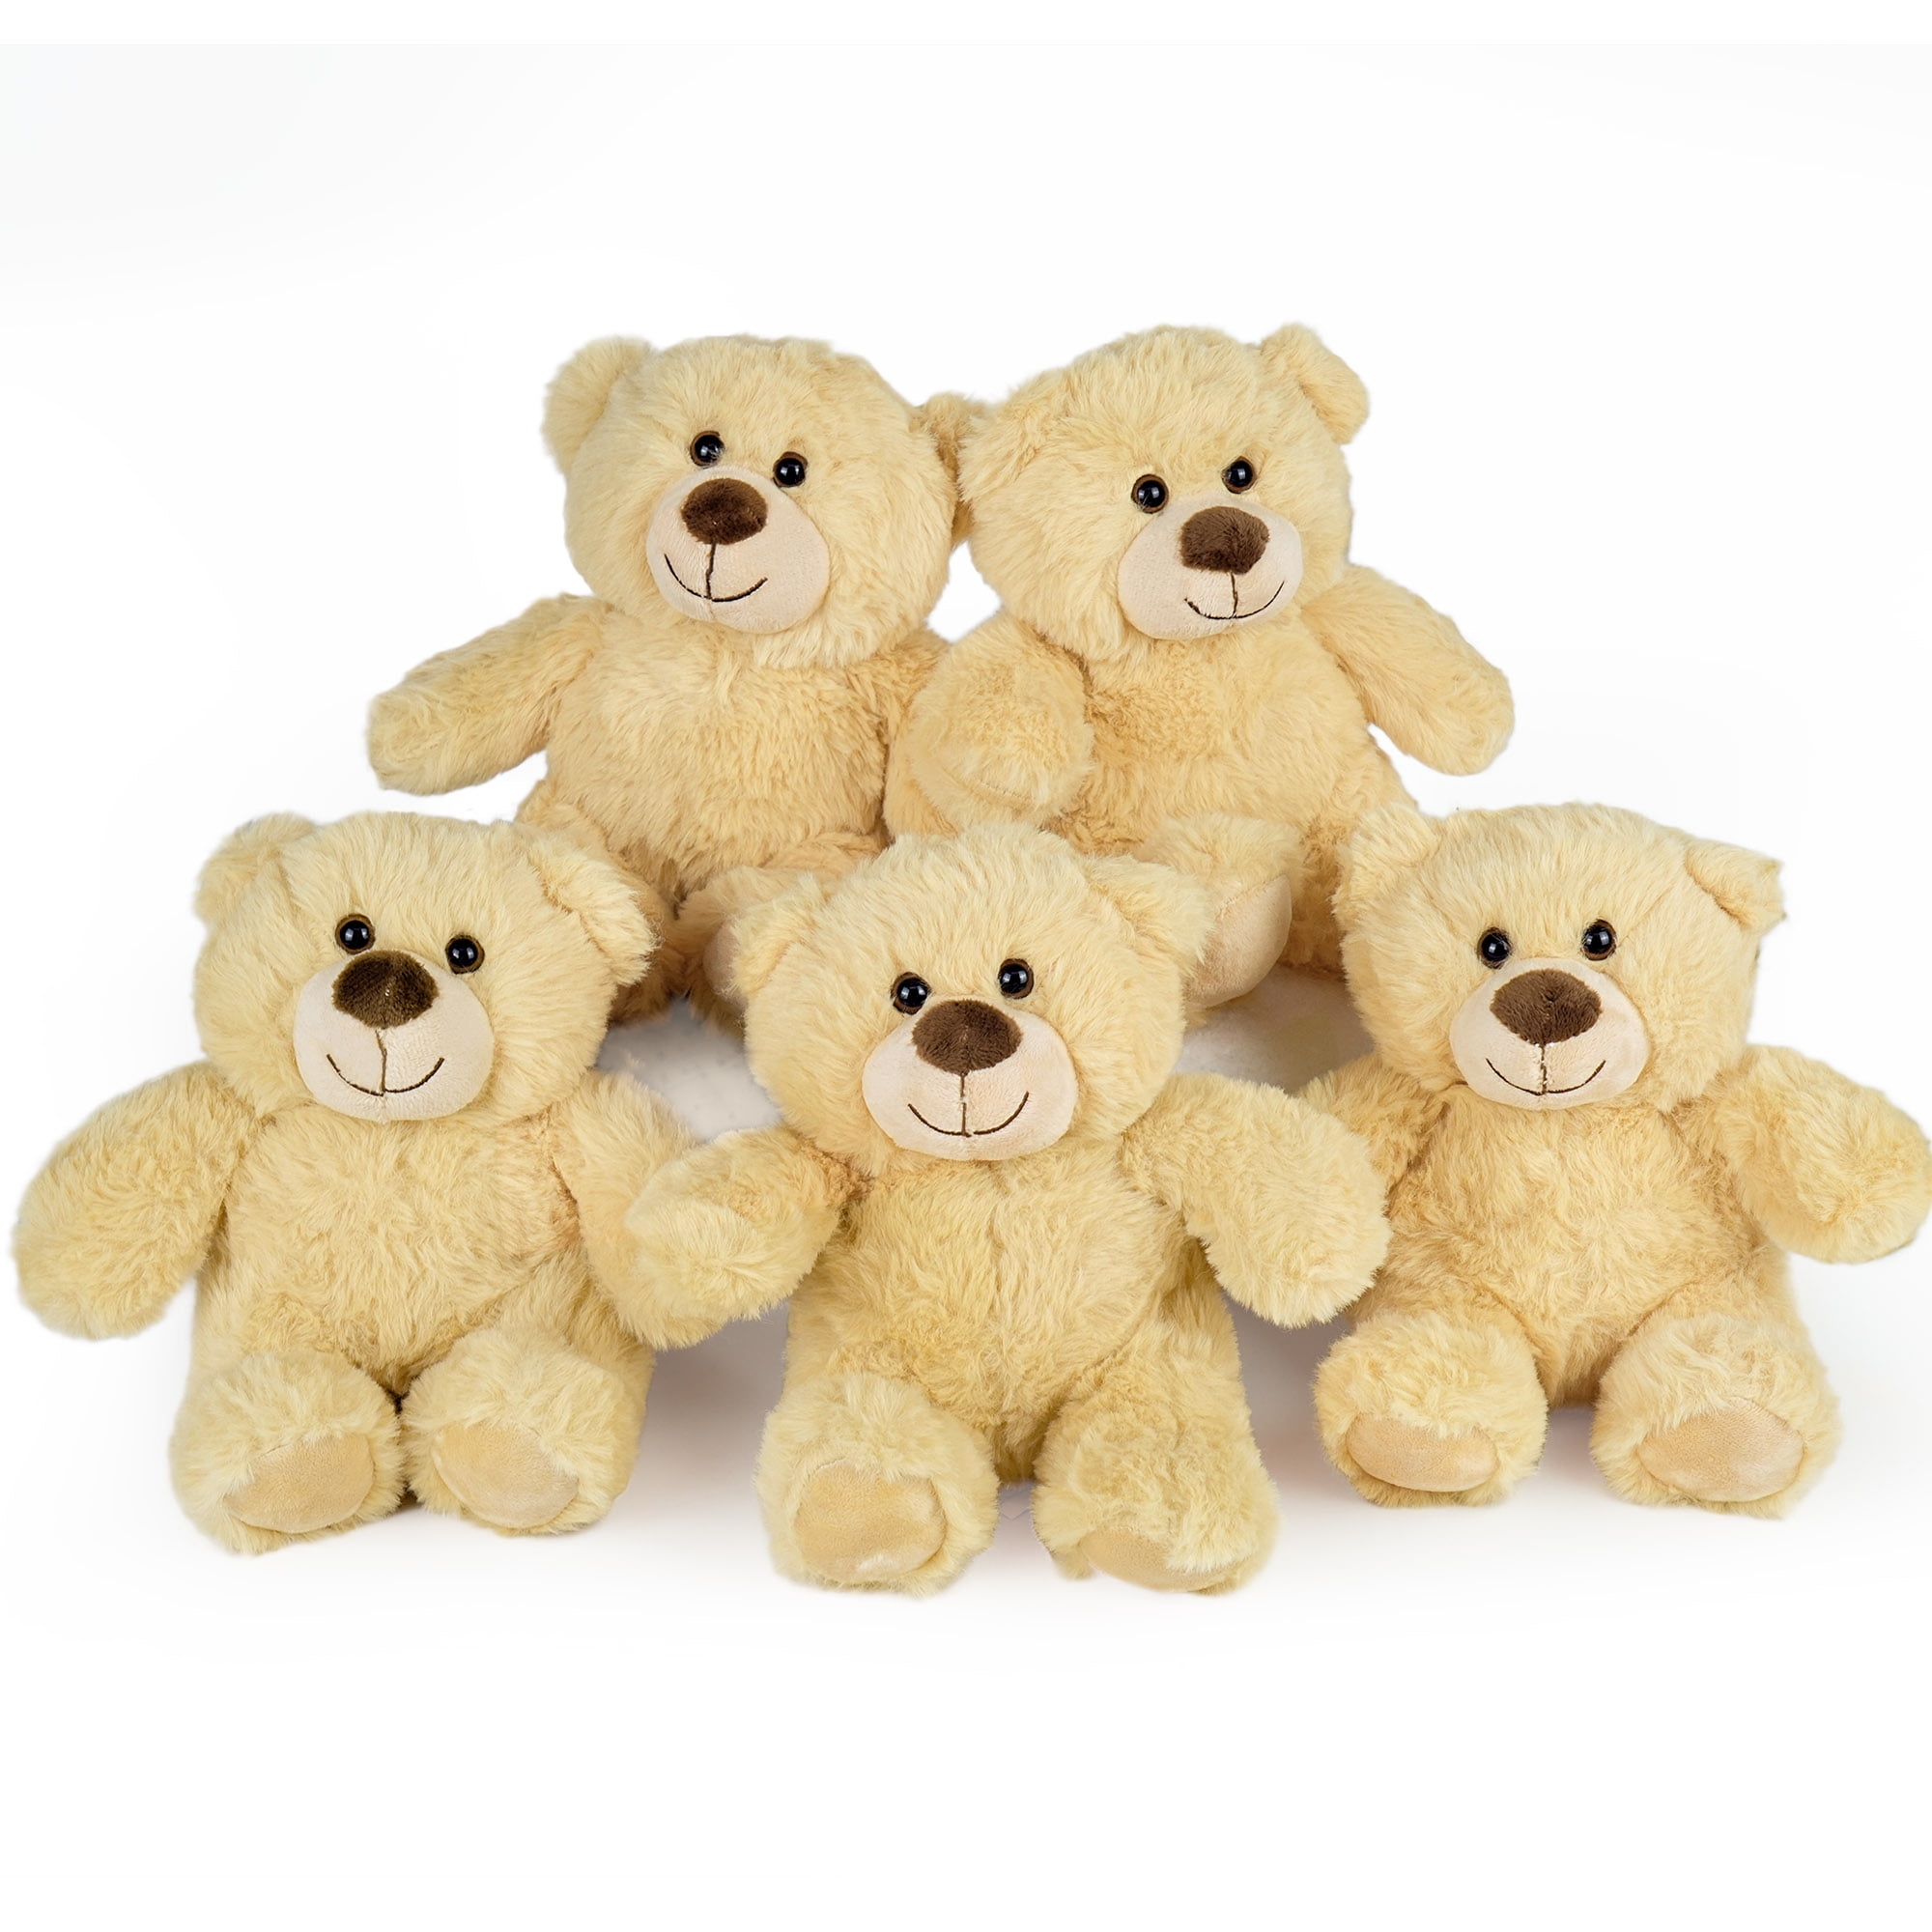 LotFancy Teddy Bear Stuffed Animal, 5 Pack 10 in Bulk Bear Plush